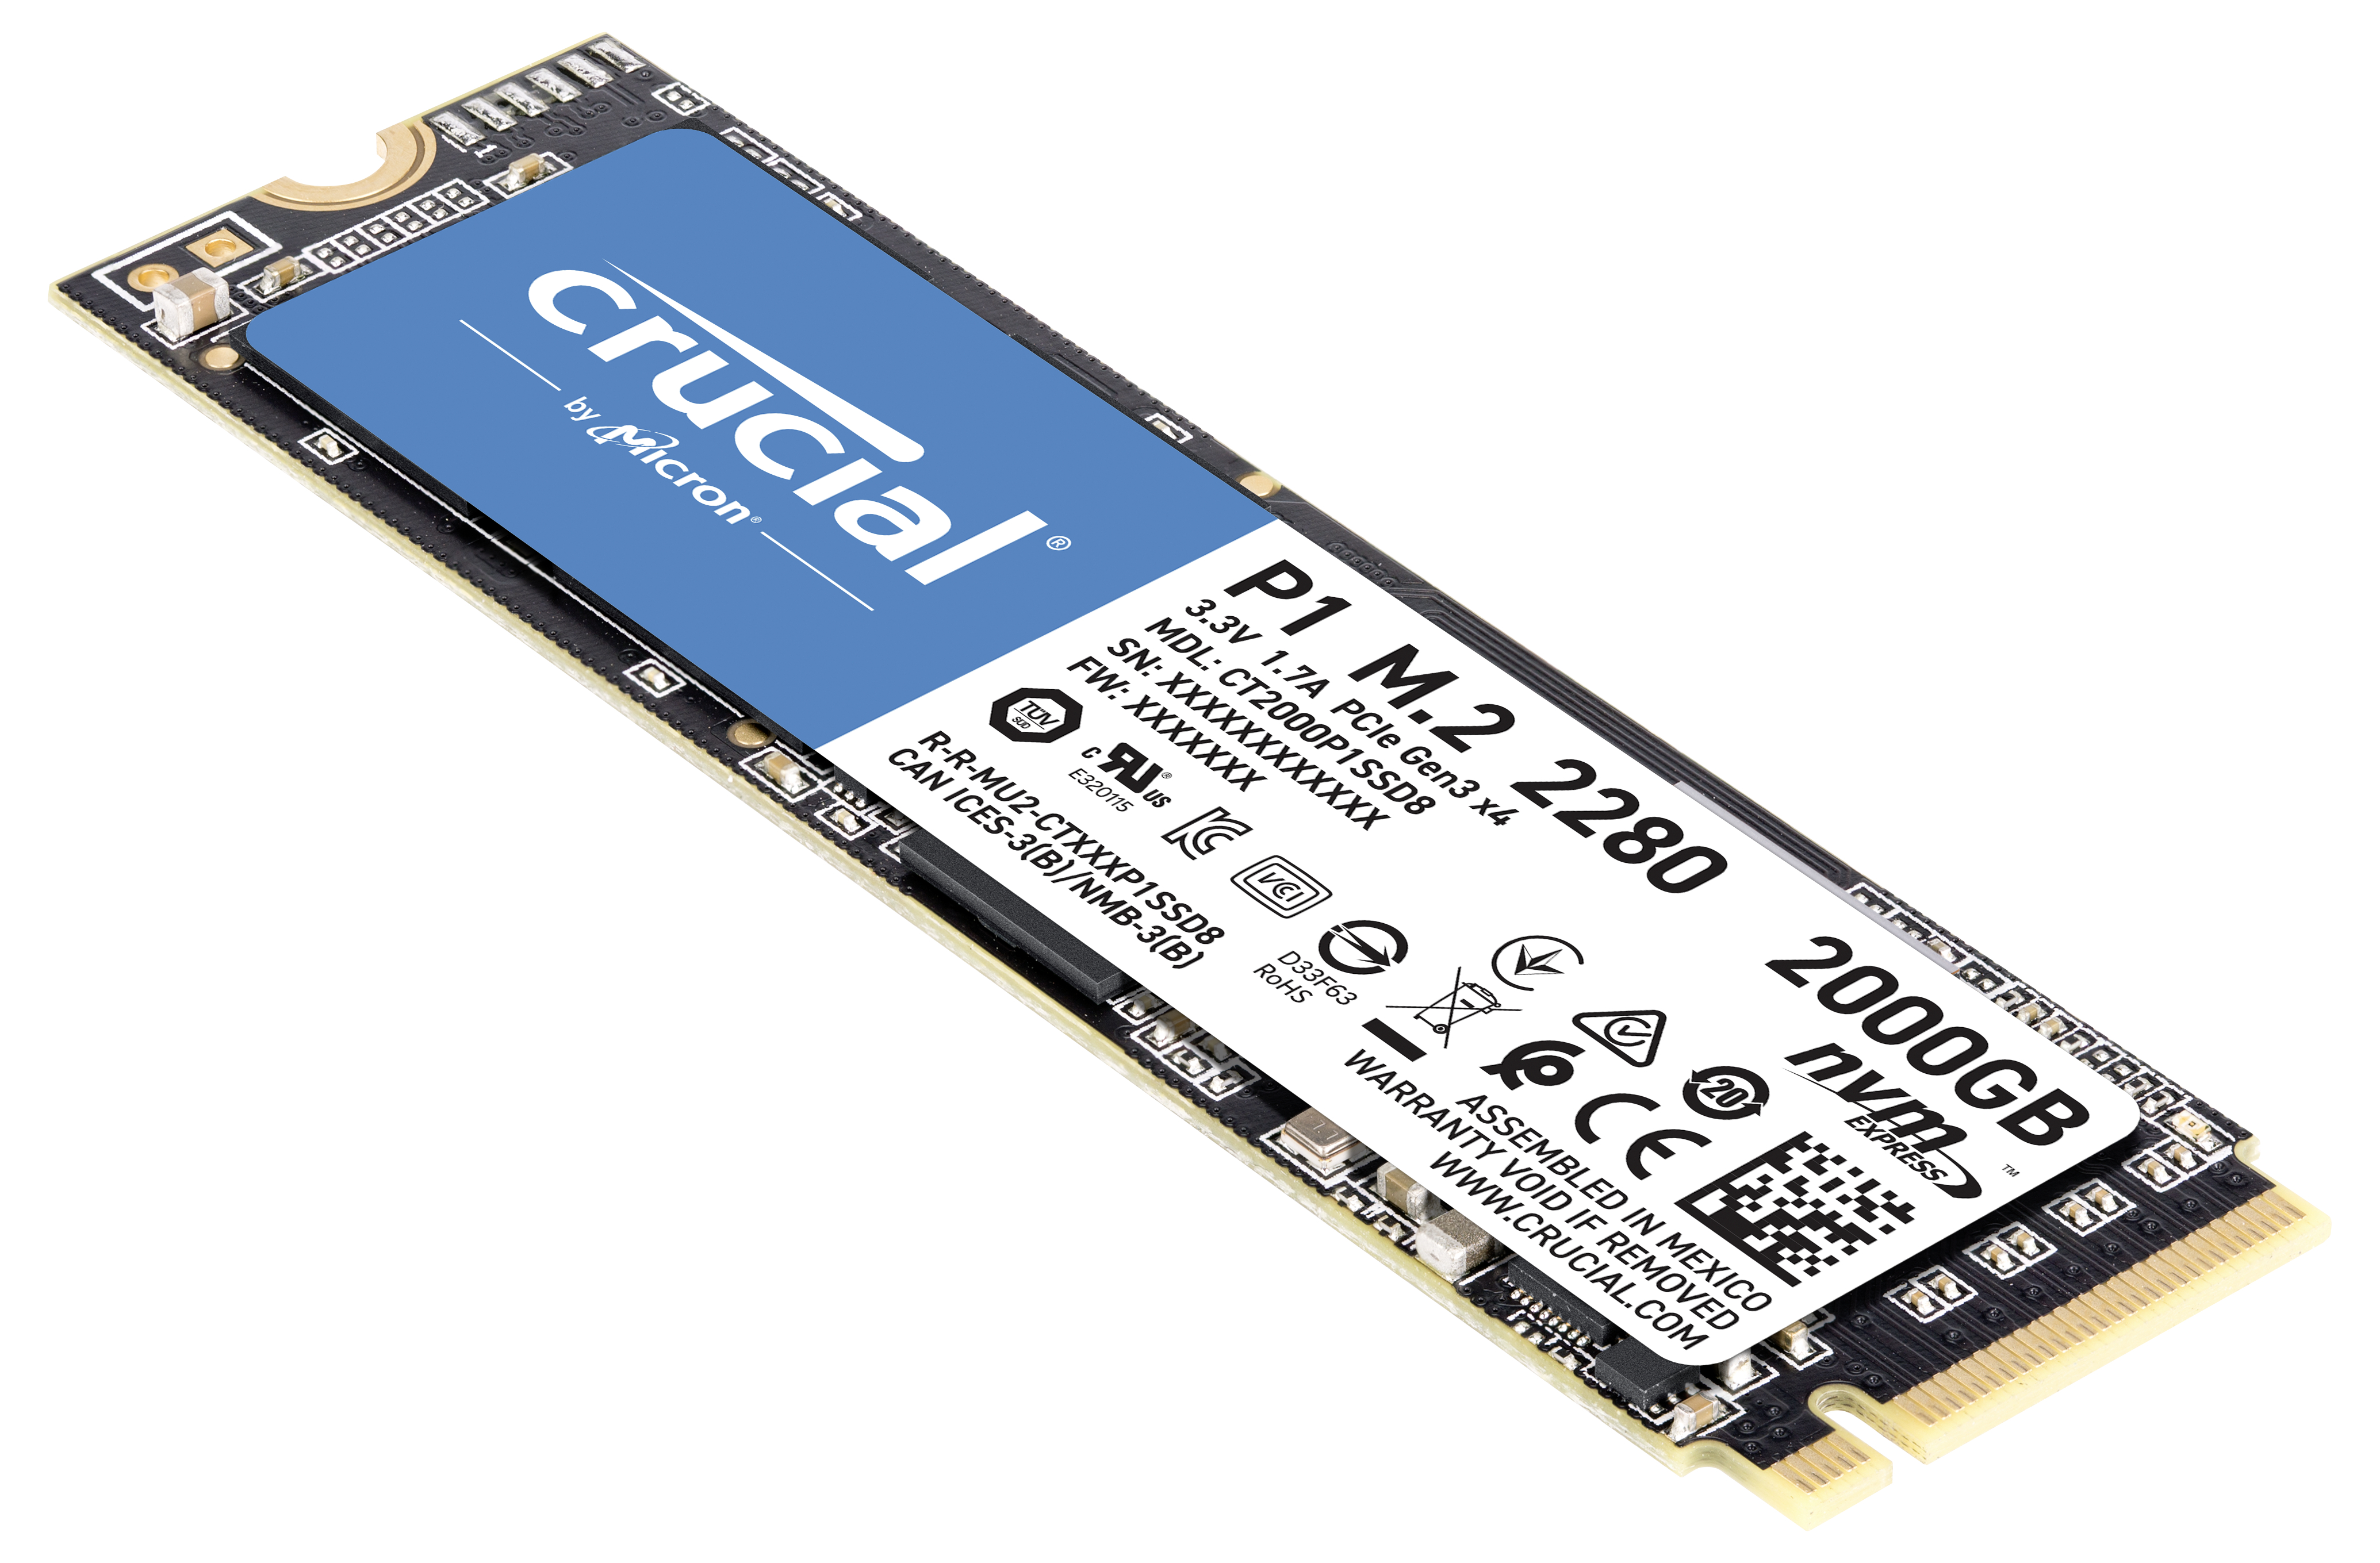 intern TB Festplatte, 2 CRUCIAL SSD M.2 via PCIe, P1